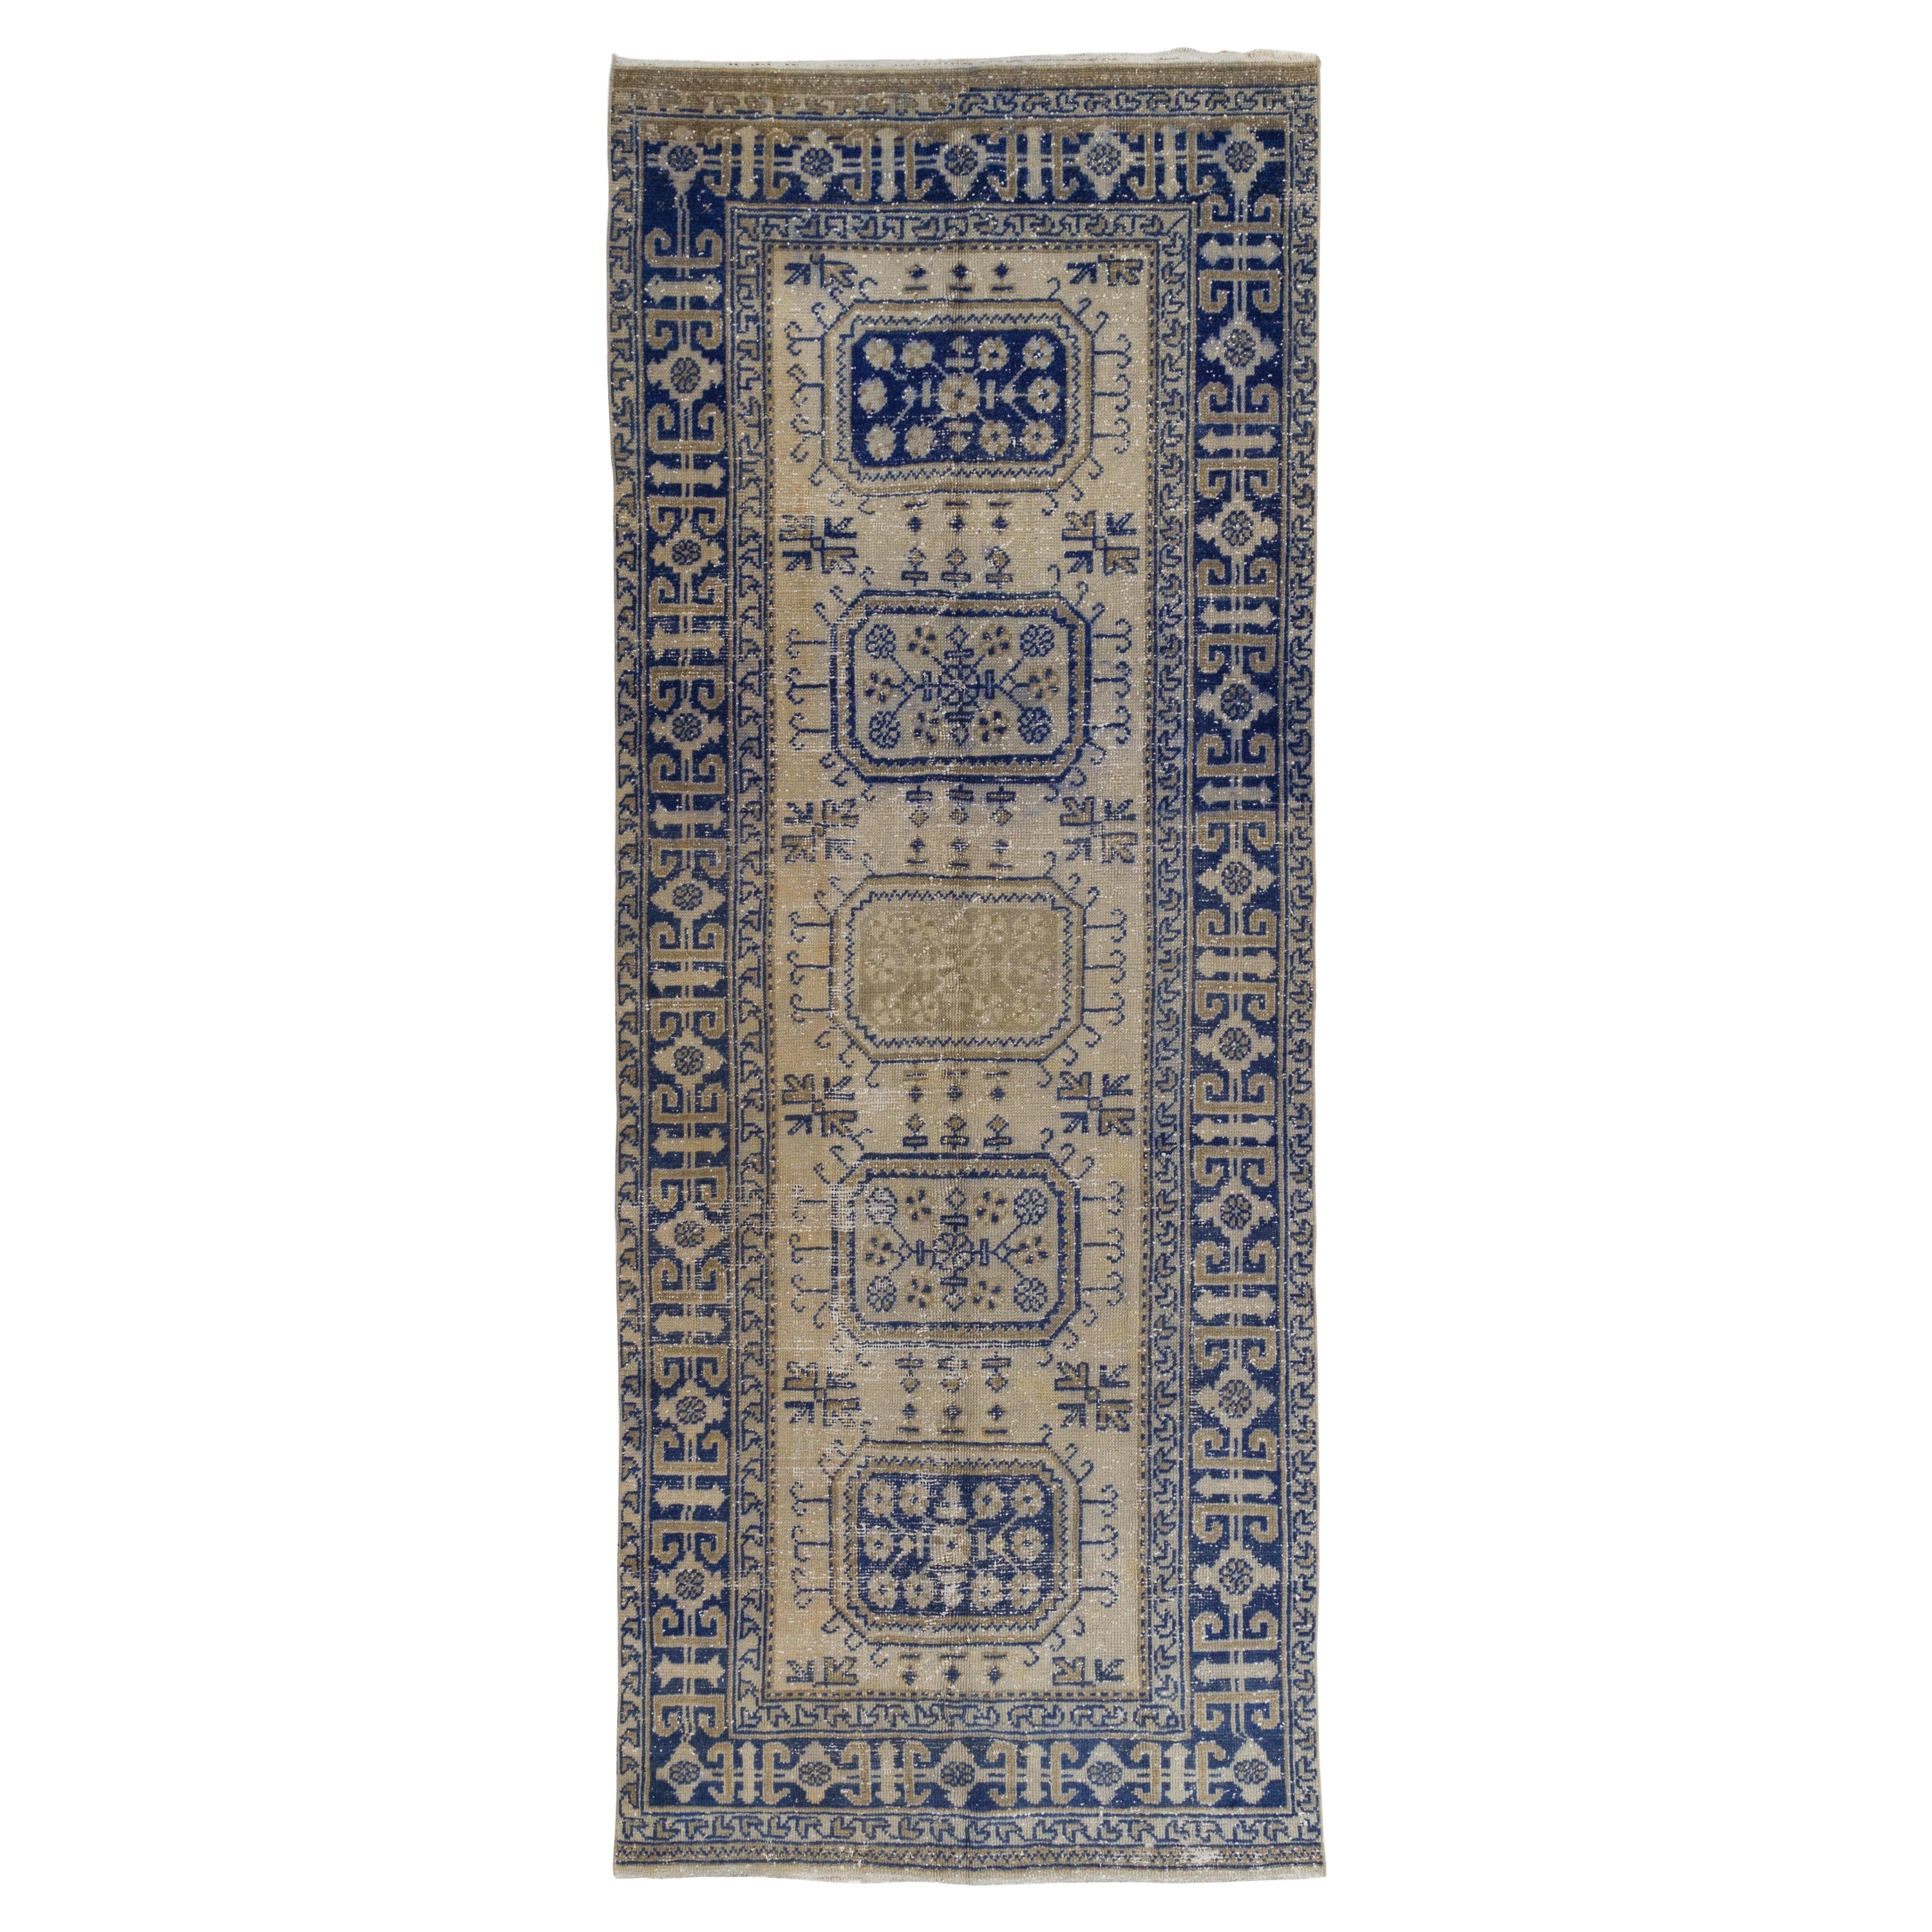 4.8x11.8 Ft Vintage Handmade Oushak Runner Rug in Beige and Navy Blue Colors For Sale